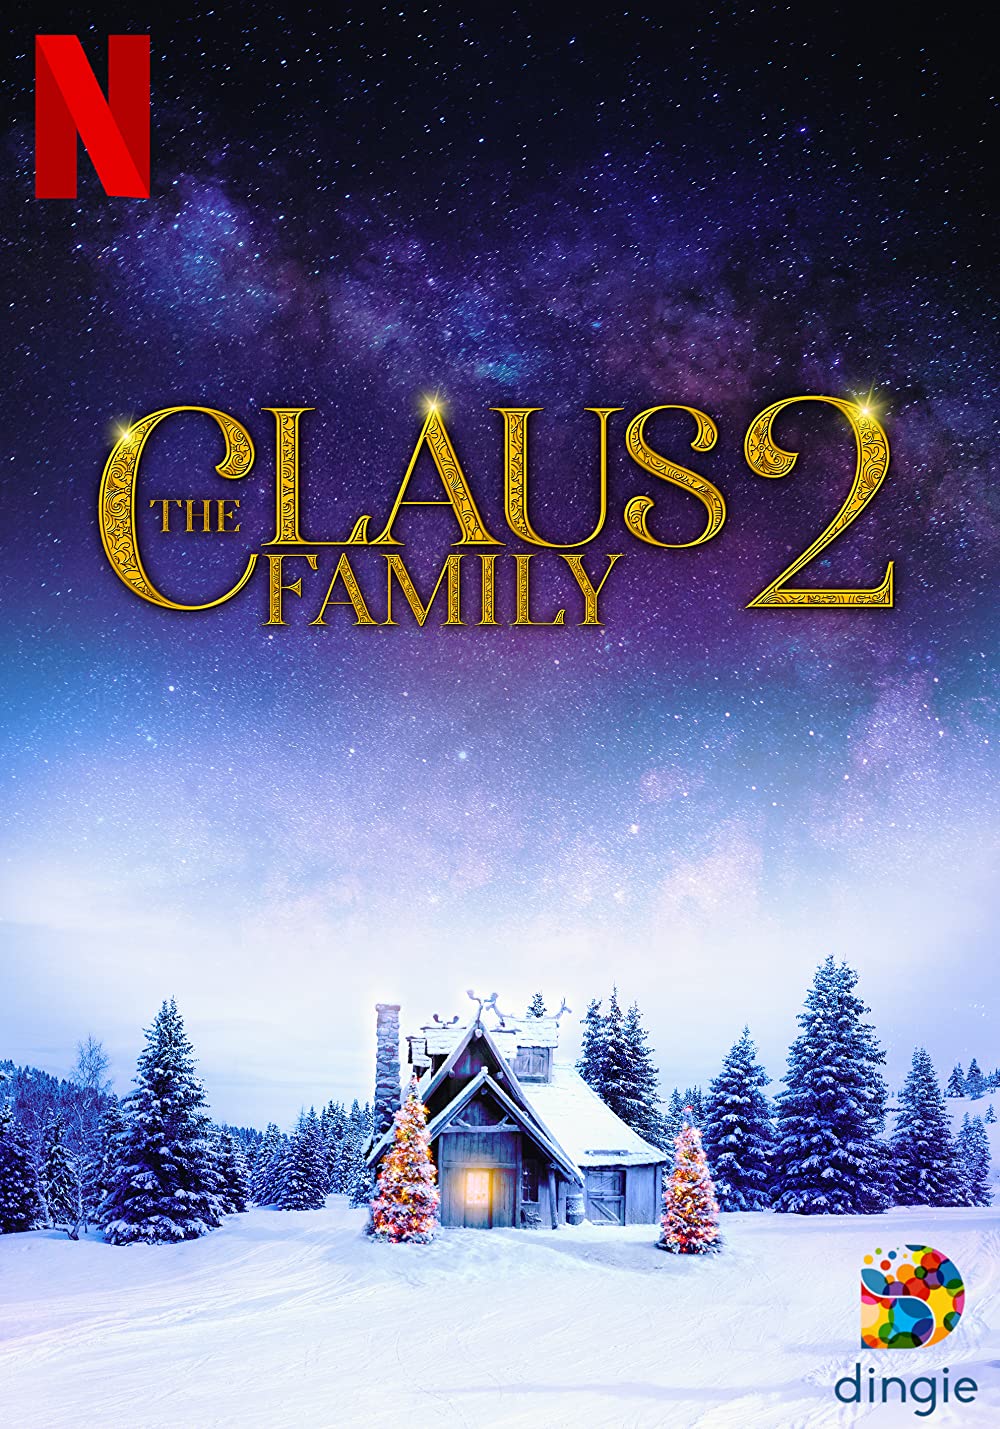 The Claus Family 2 (2021) คริสต์มาสตระกูลคลอส 2